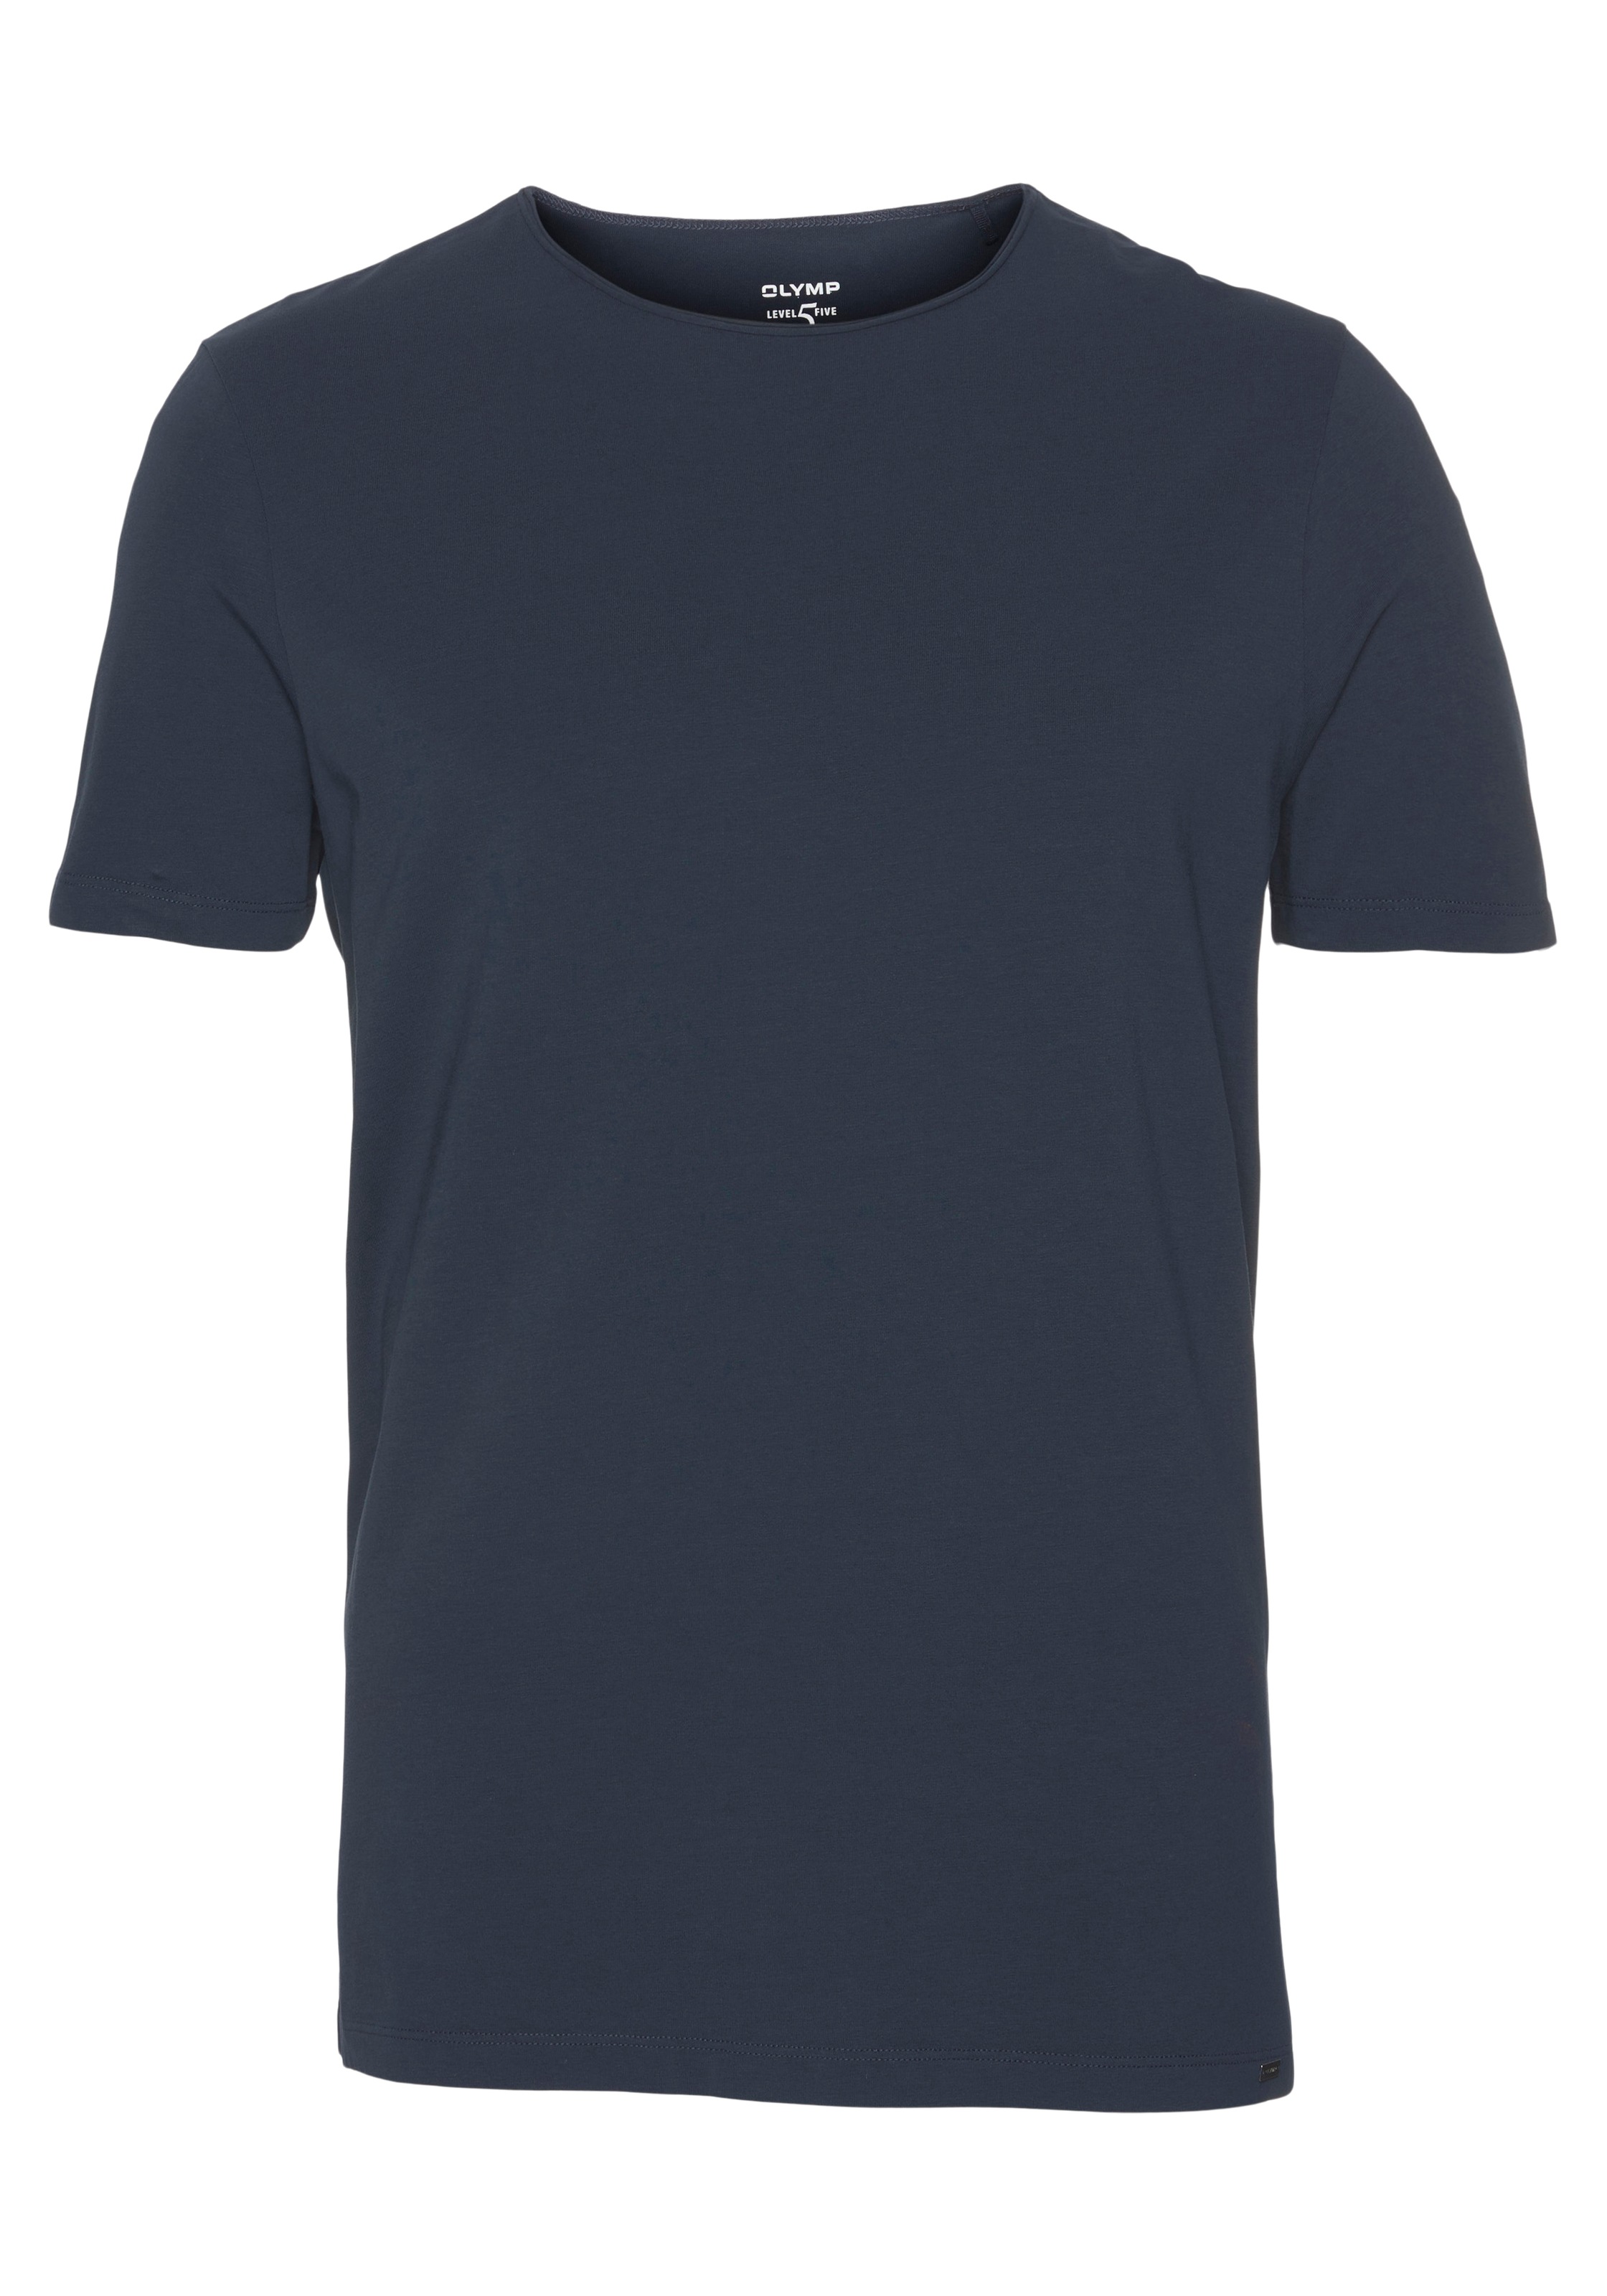 T-Shirt feinem fit«, online aus Five OTTO bei »Level Jersey OLYMP bestellen body